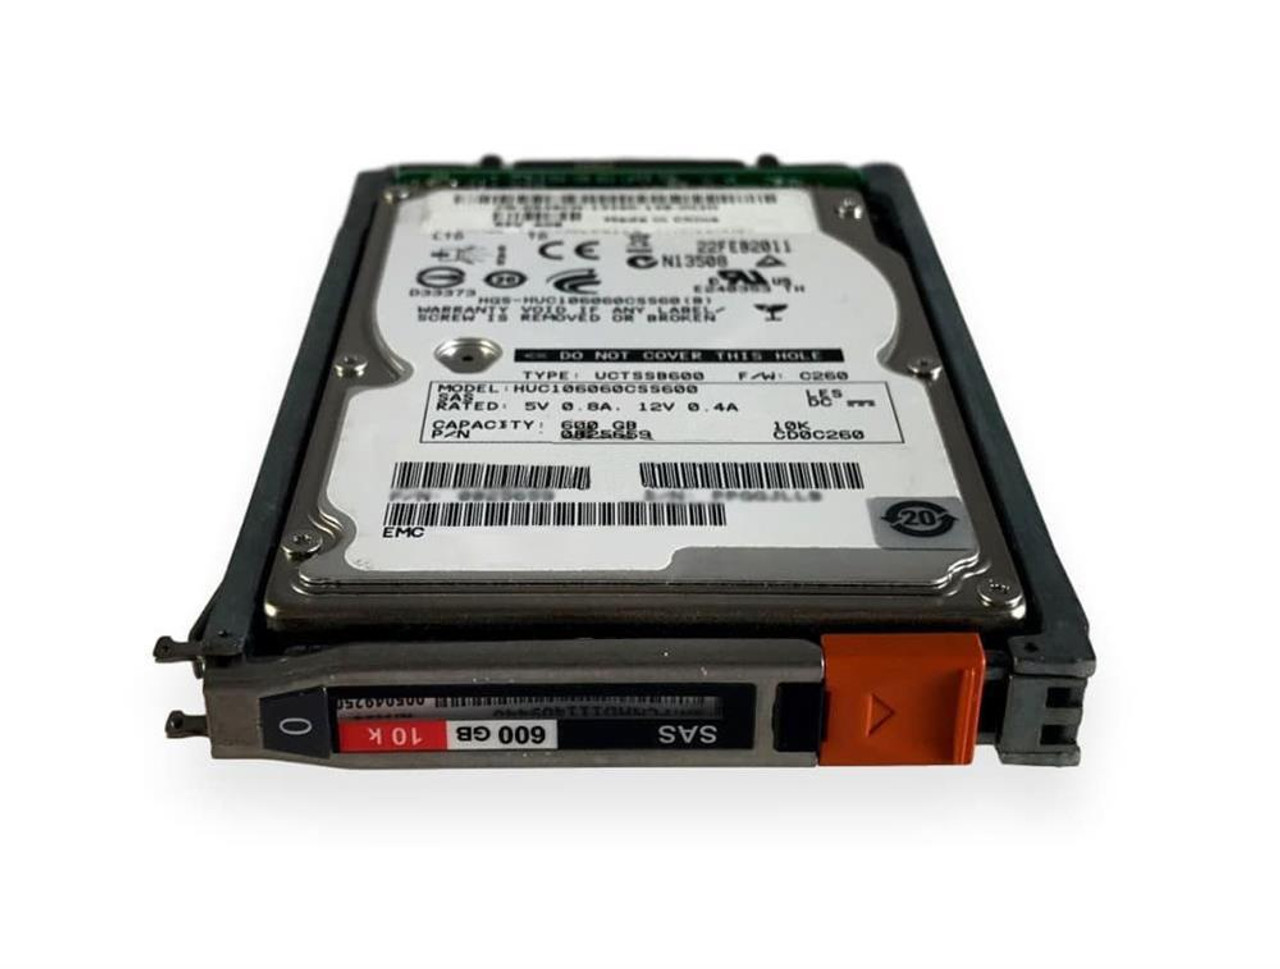 T3-2S10-600U EMC 600GB 10000RPM SAS 12Gbps 2.5-inch Internal Hard Drive for Unity 25 x 2.5 Enclosure